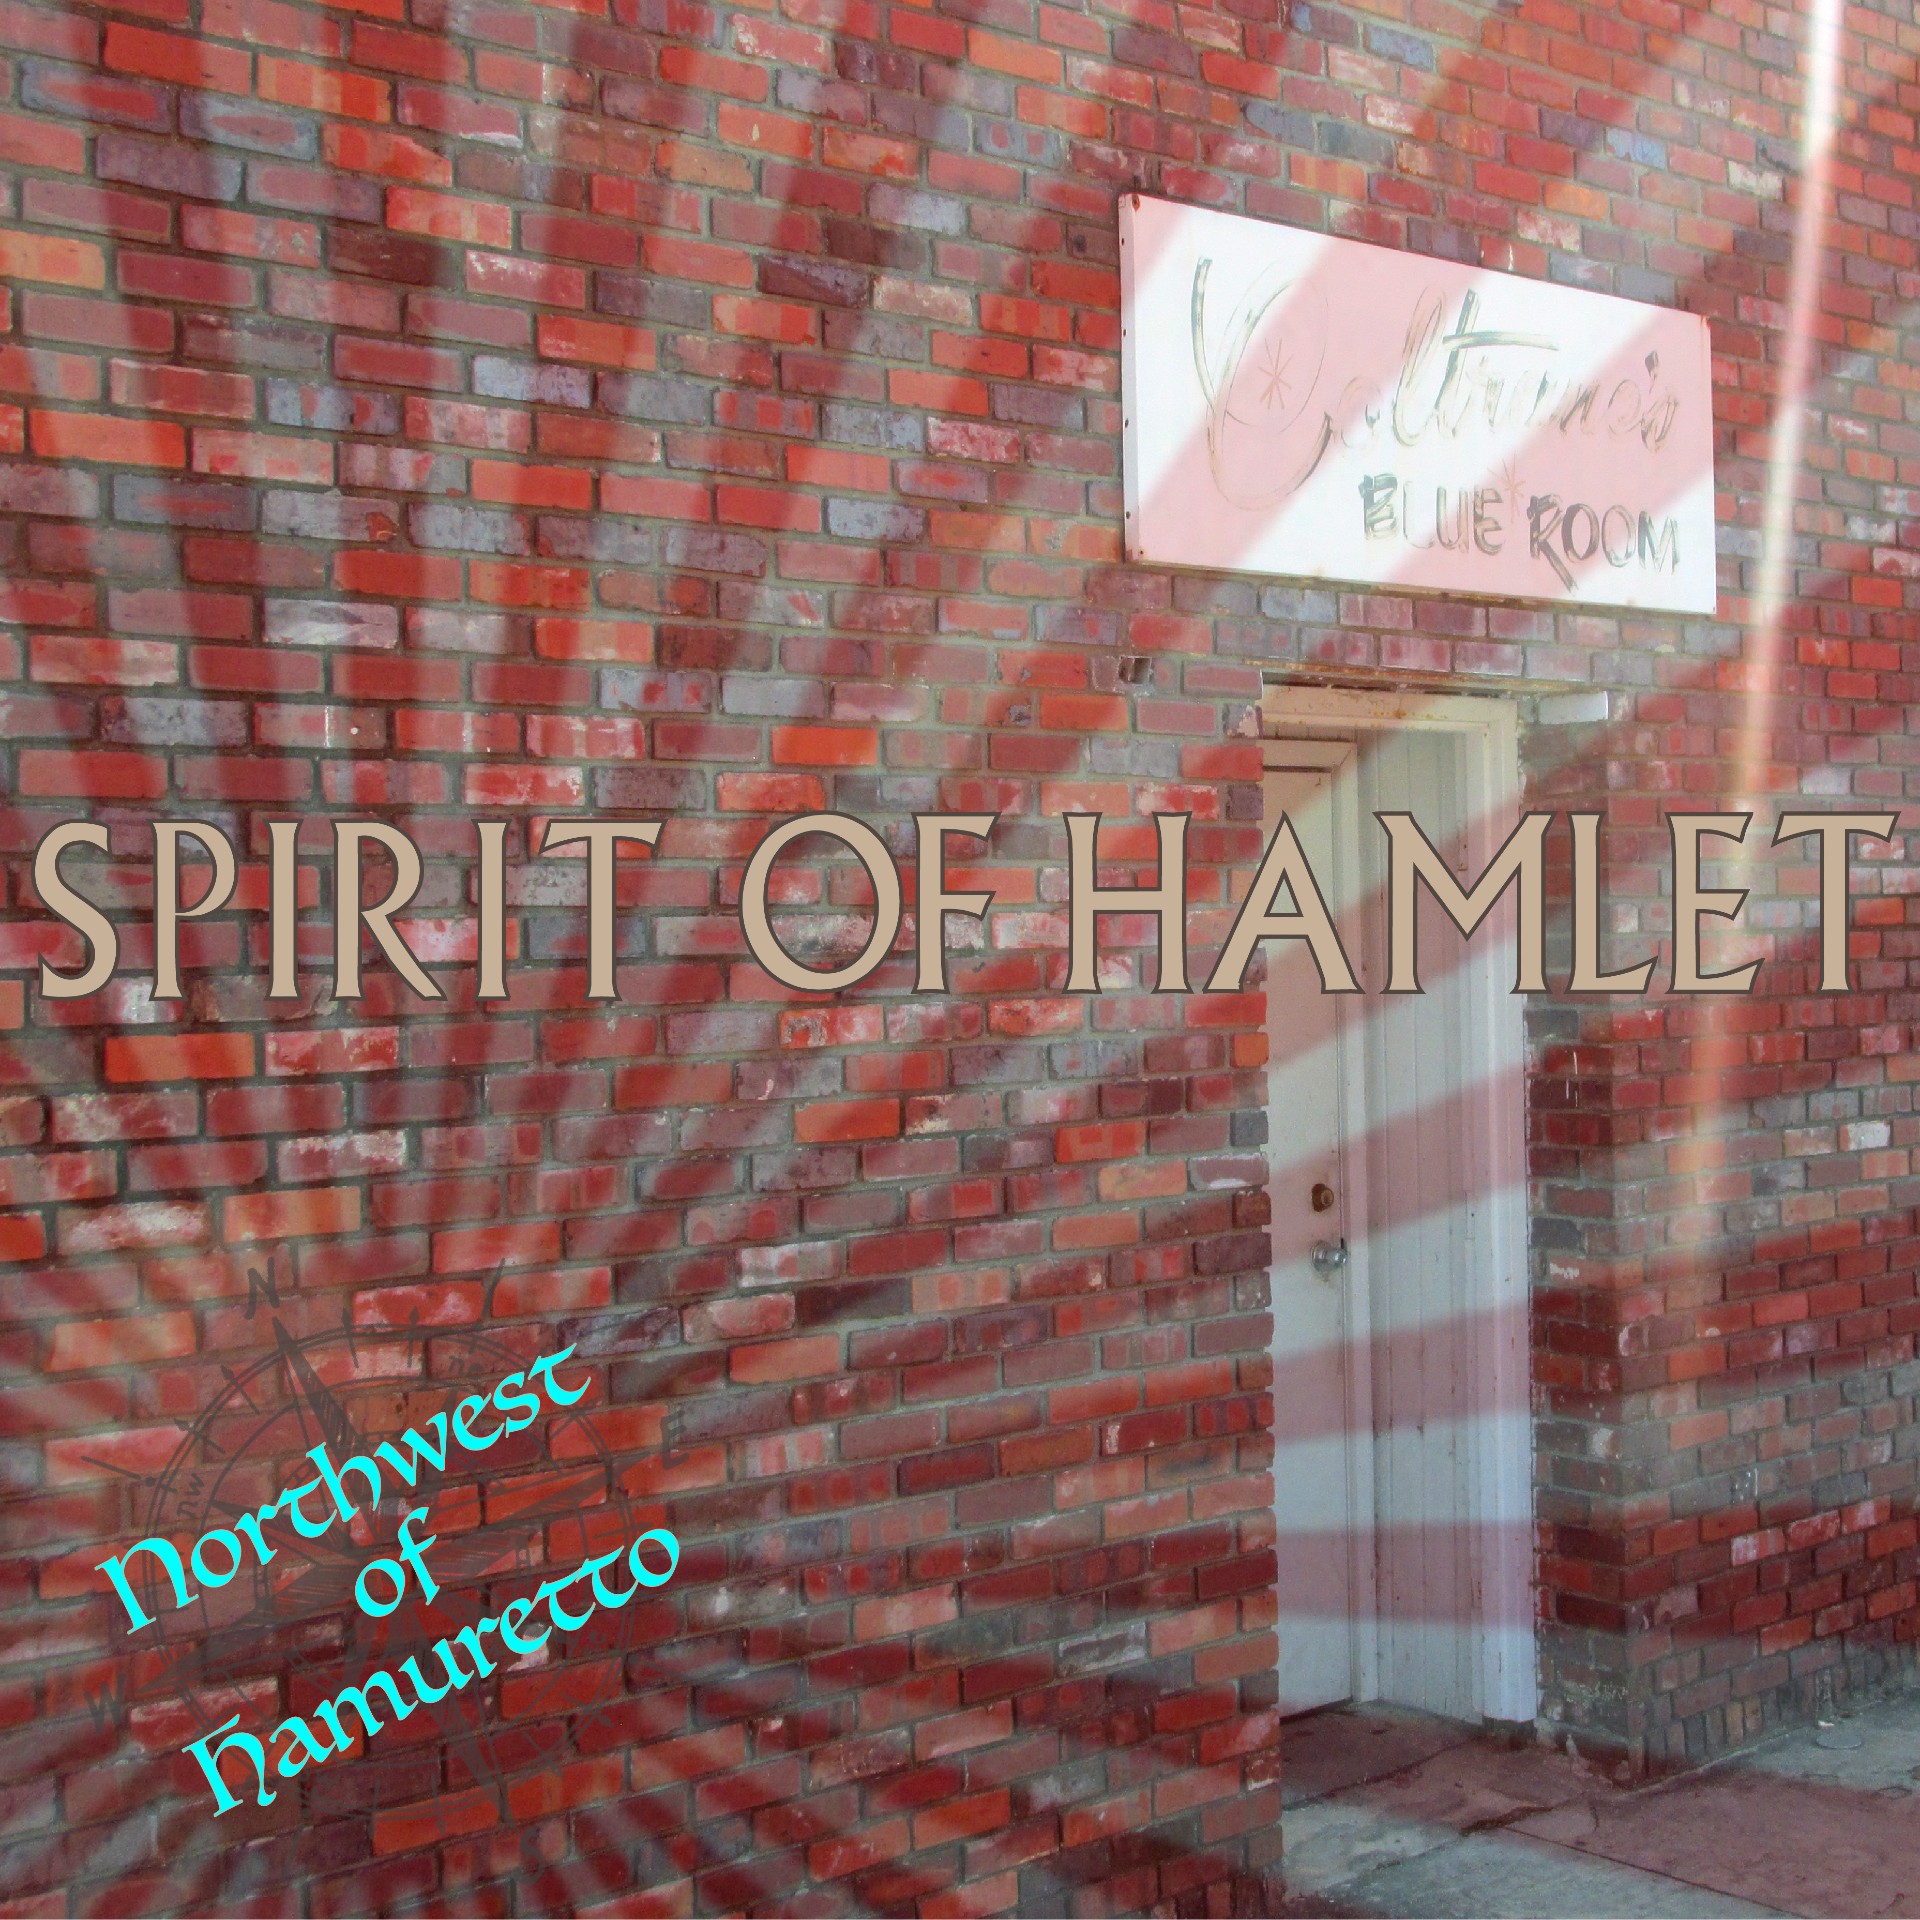 Artrowk for the album ‘Northwest of Hamuretto’ by Spirit Of Hamlet